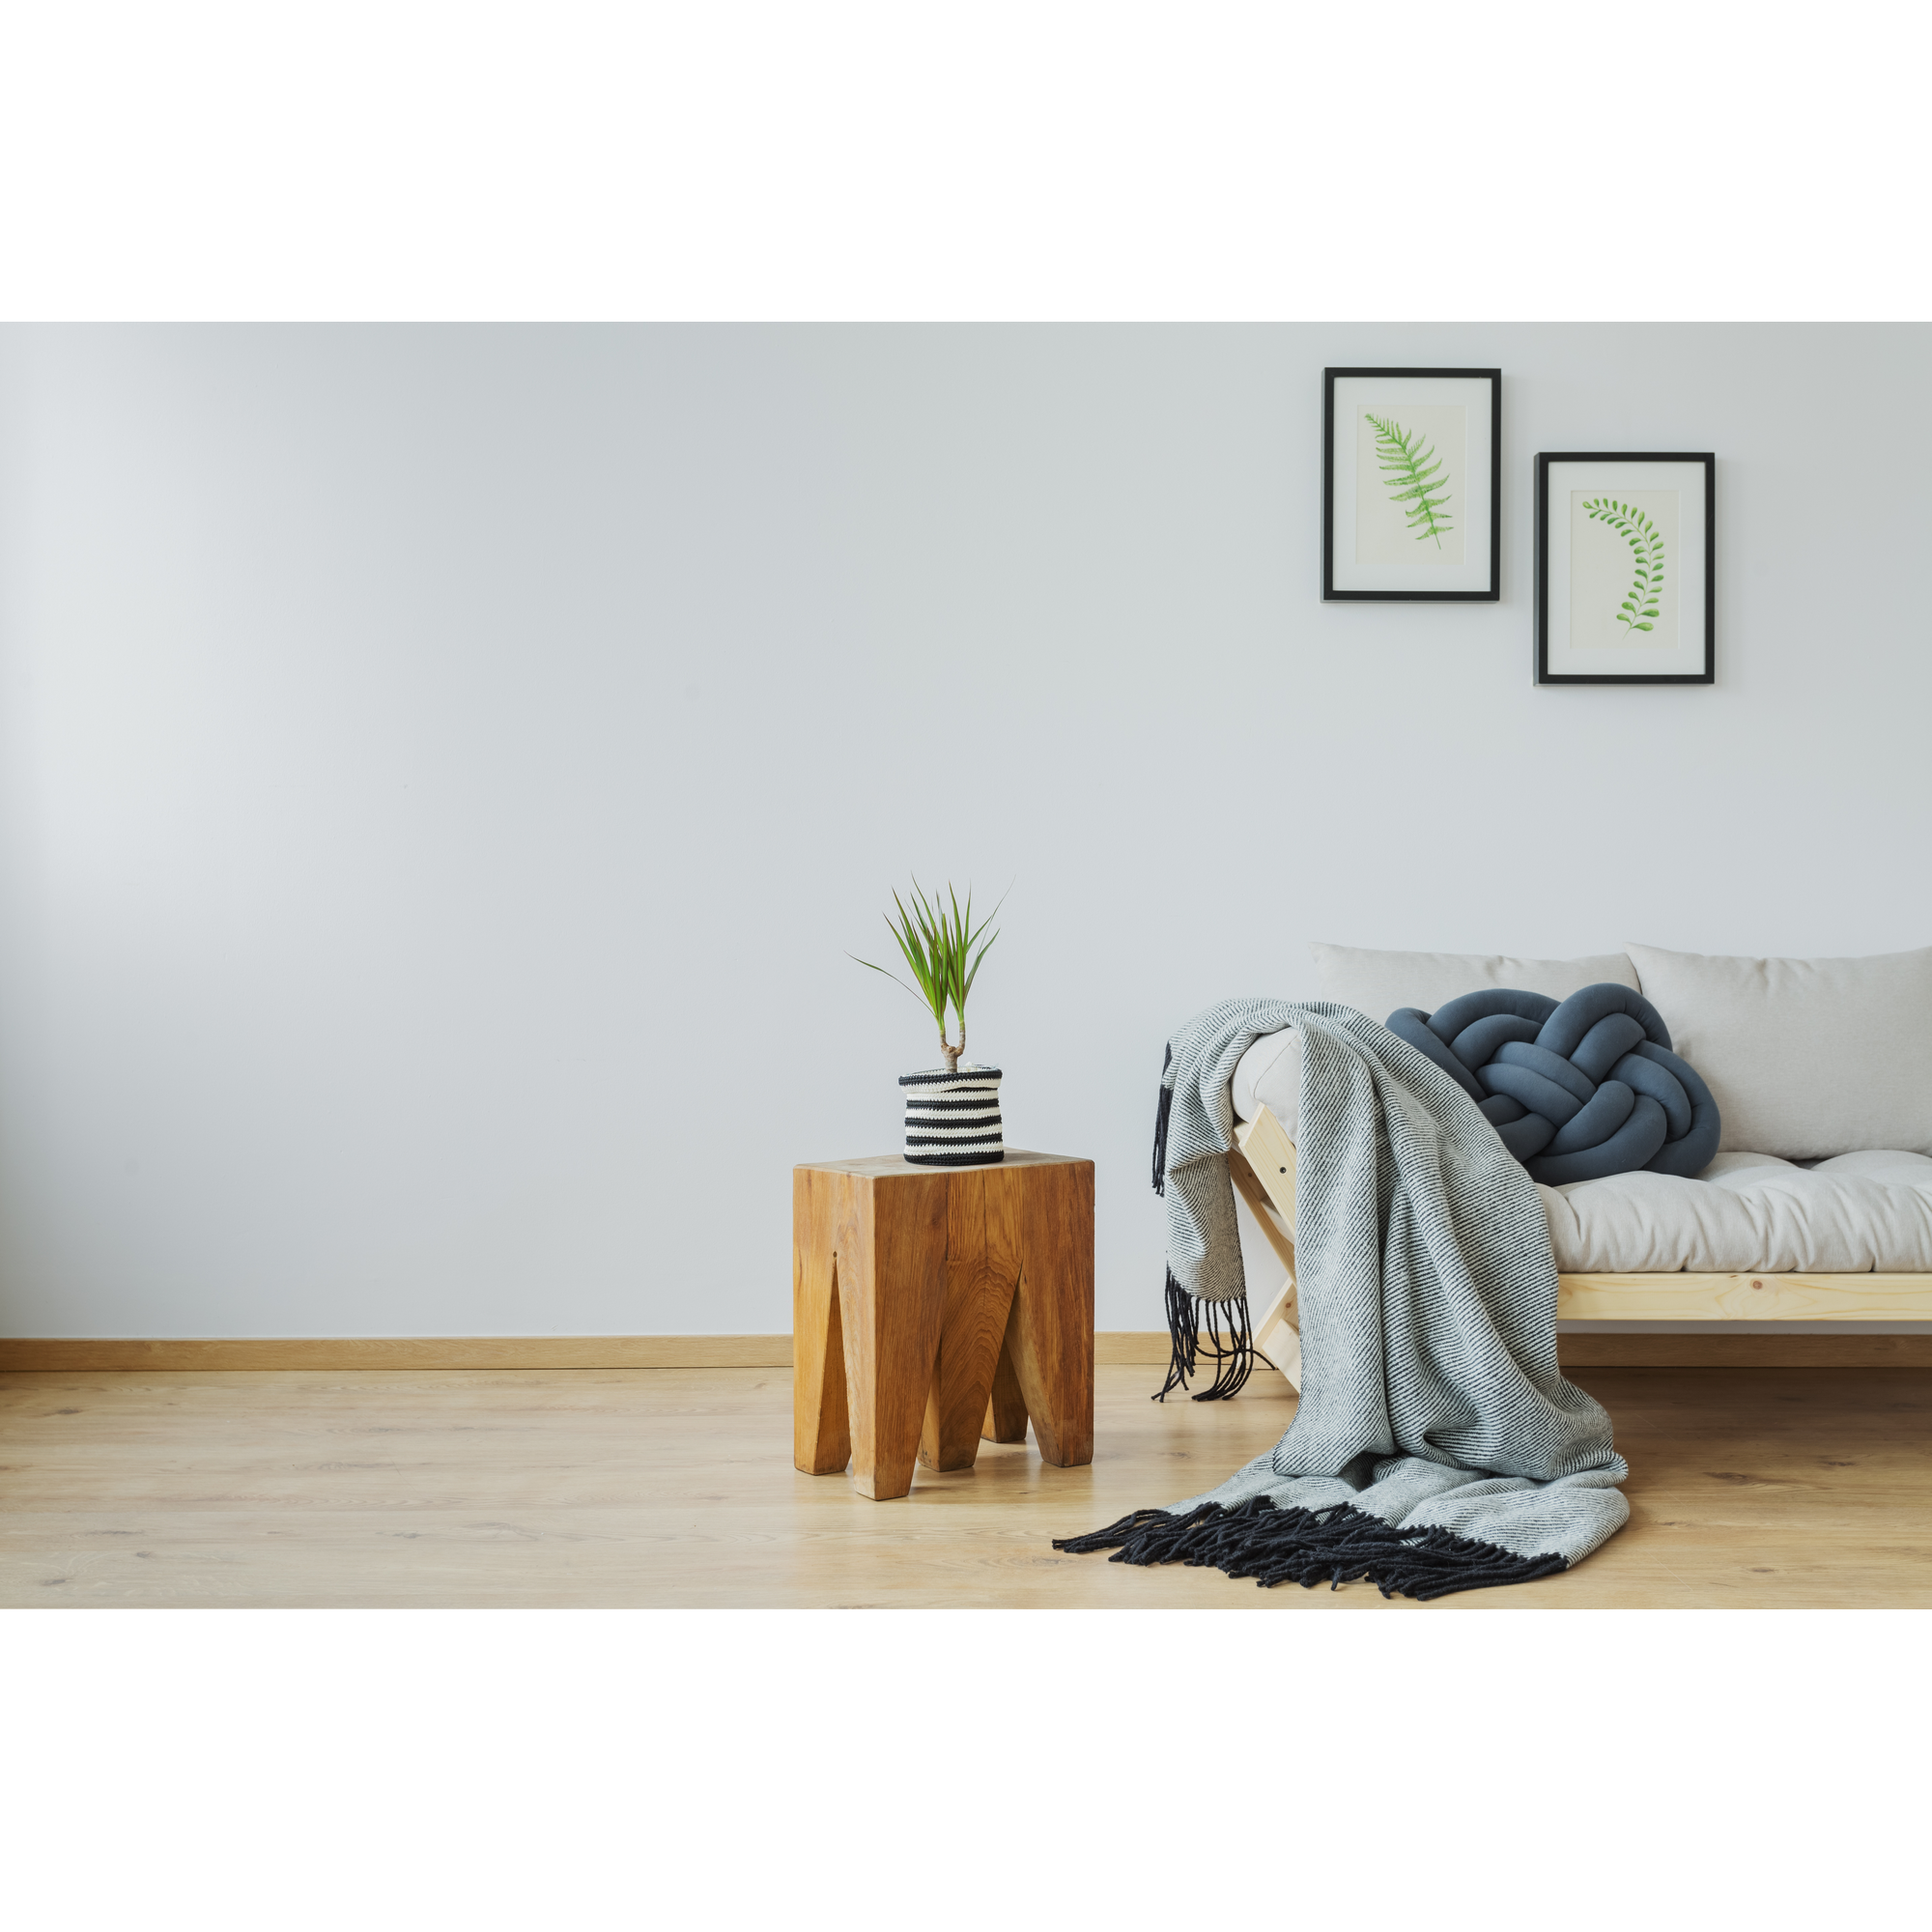 Vliestapete 'Variovlies Flat Premium' weiß 0,75 x 25 m + product picture